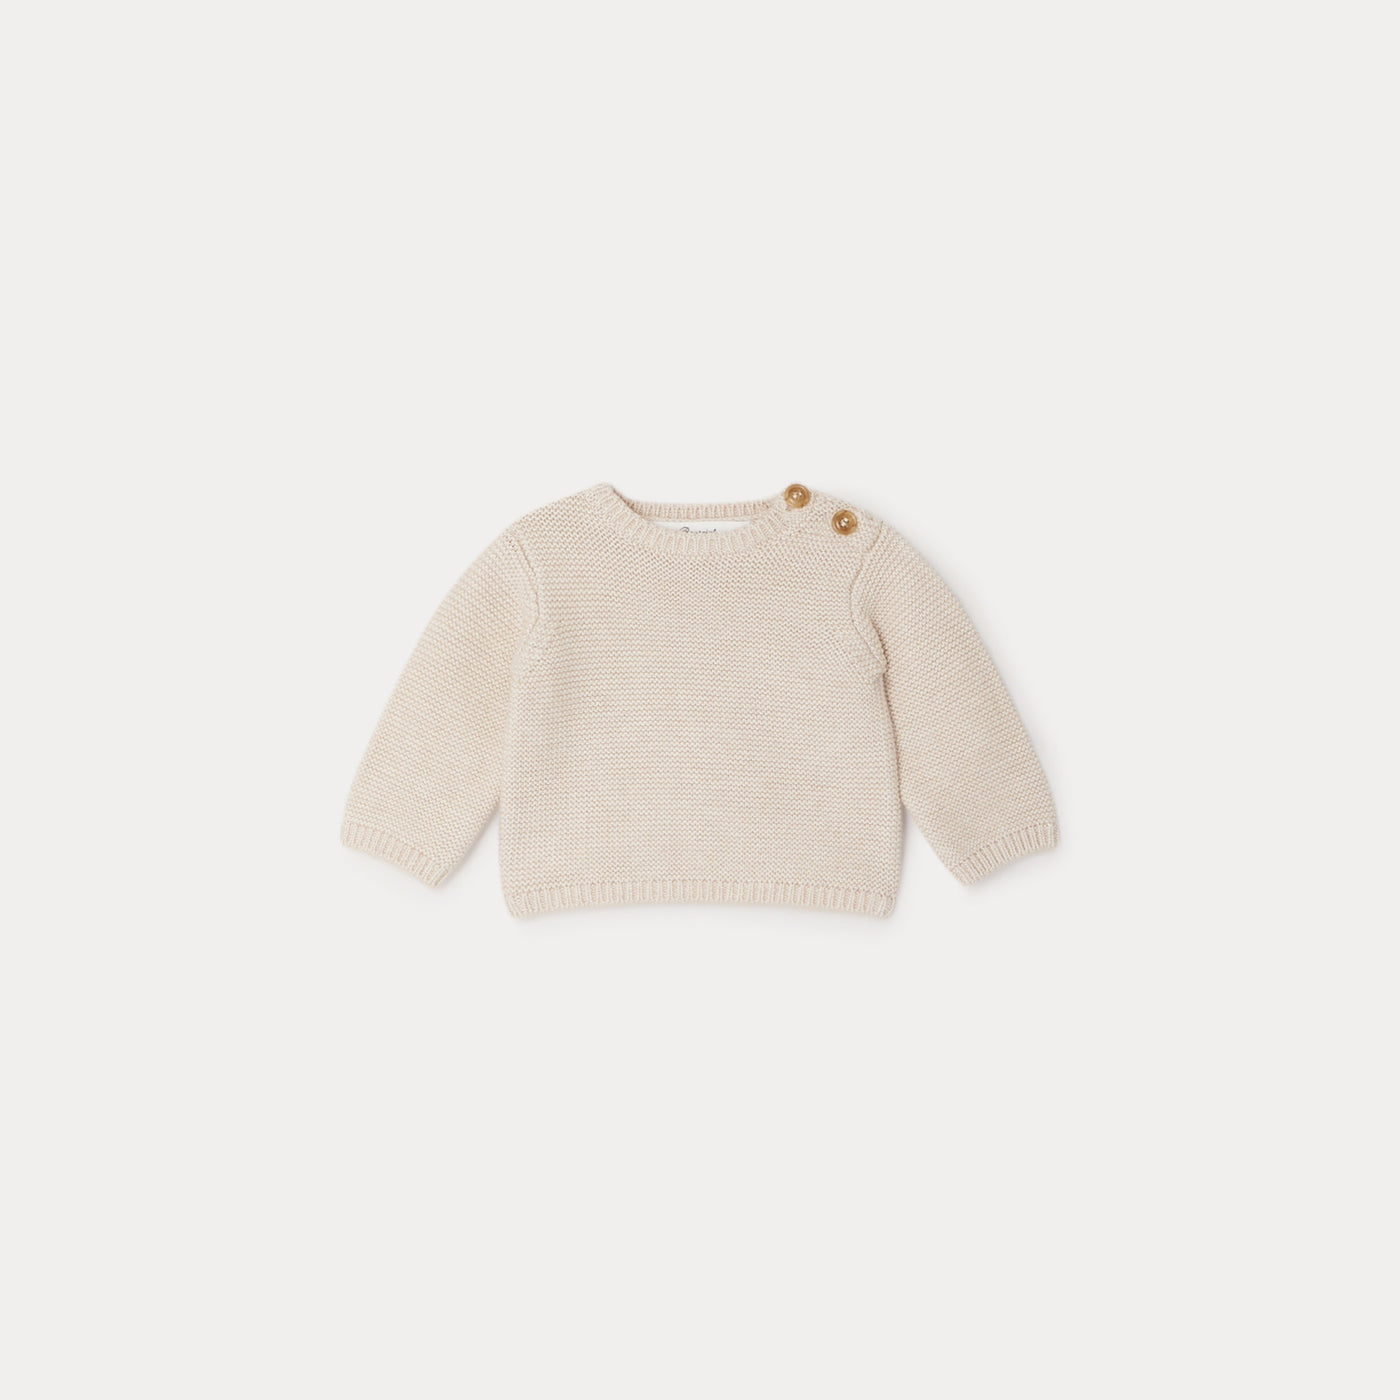 Bonpoint tan baby sweater